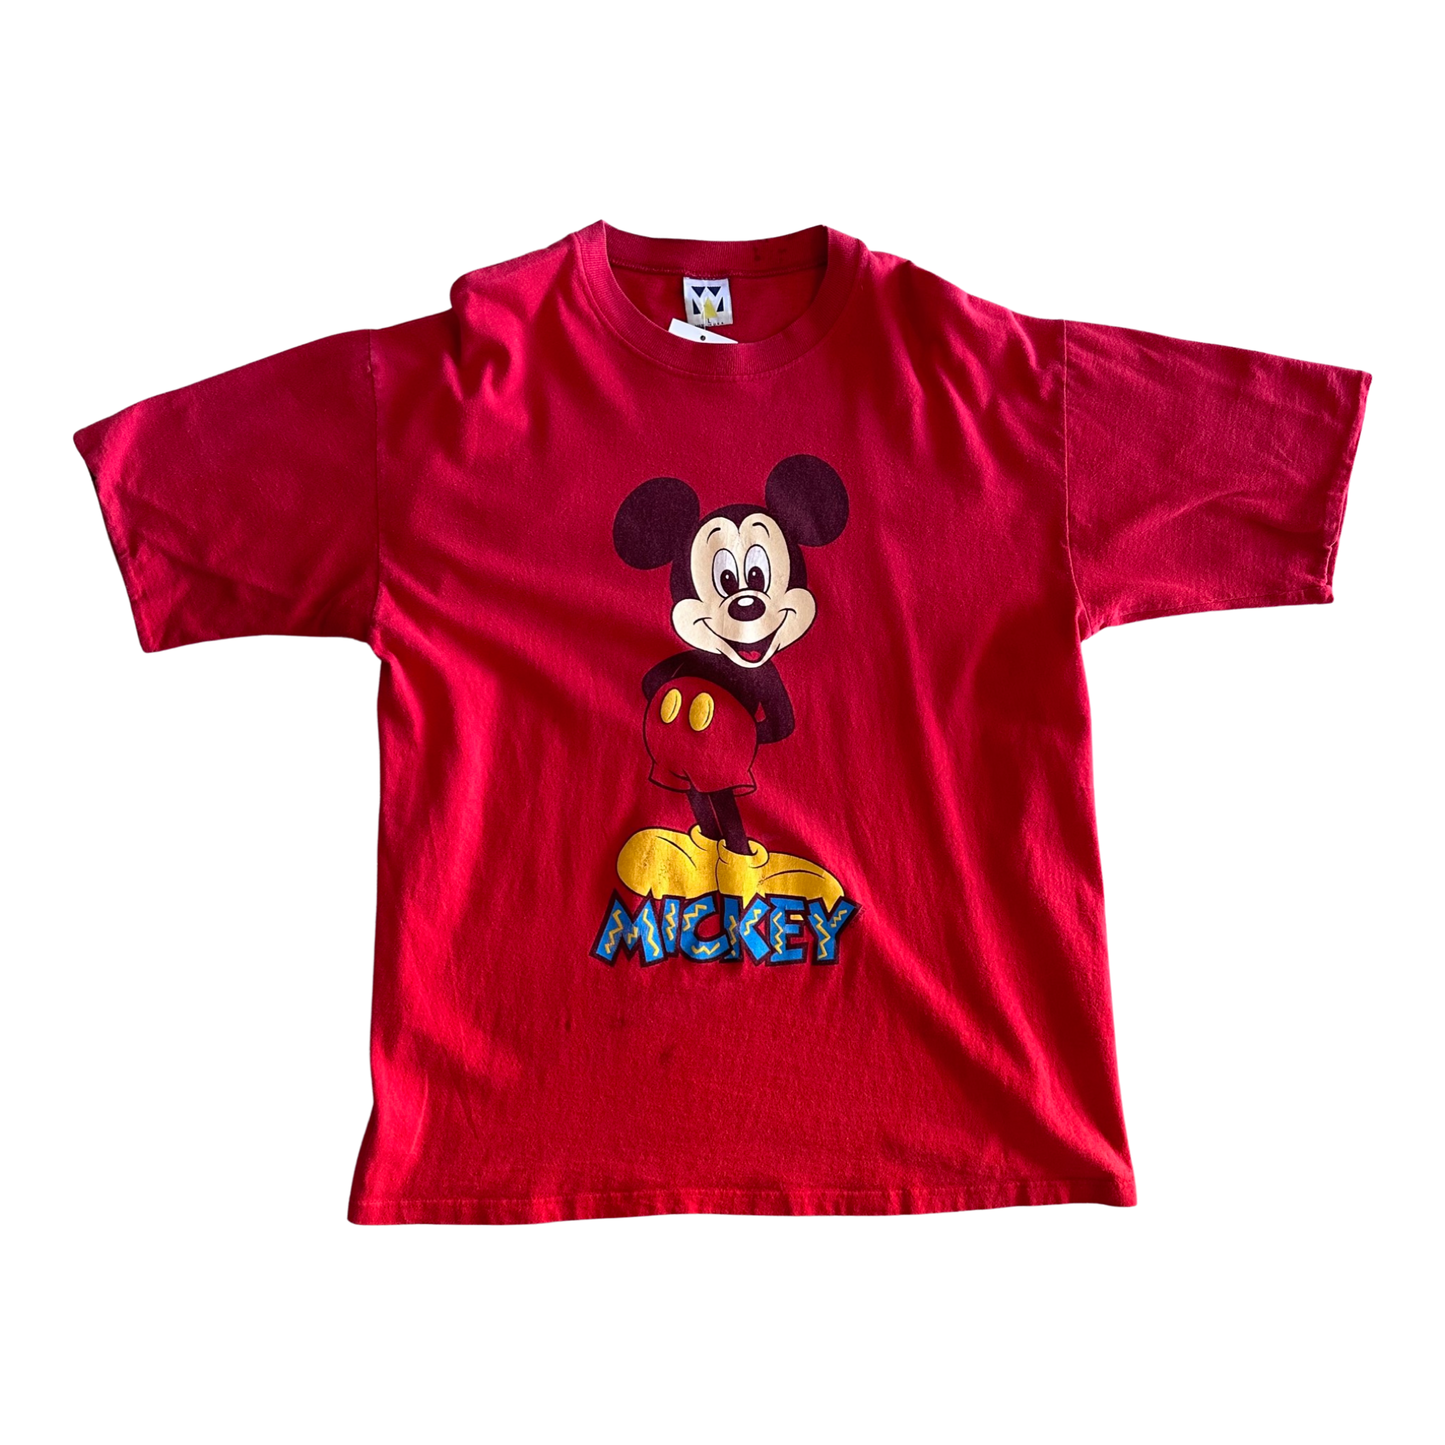 Vintage 90s Disney Mickey Mouse Tee LRG